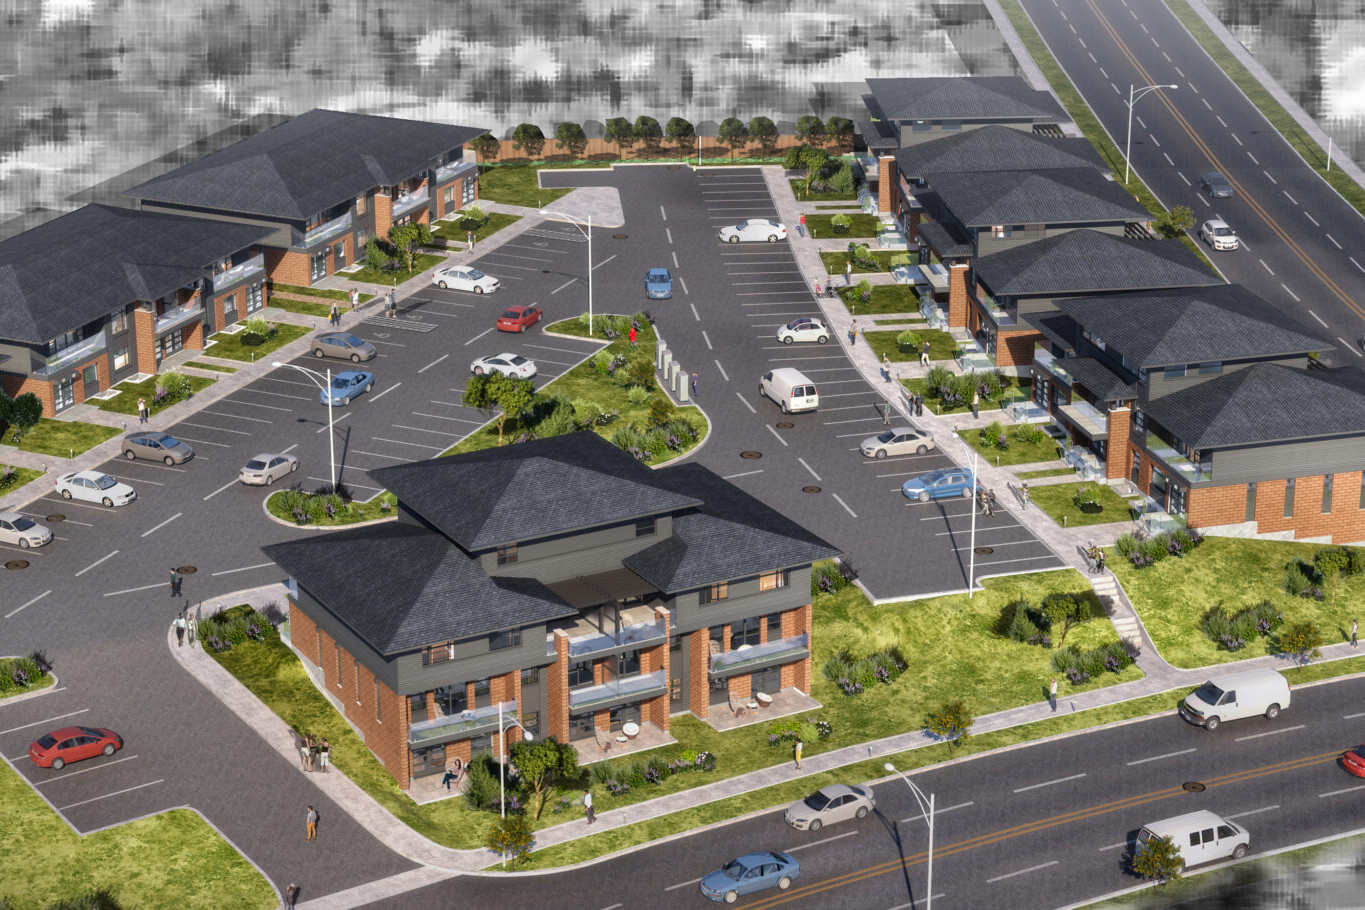 Rendering of aerial view of housing development